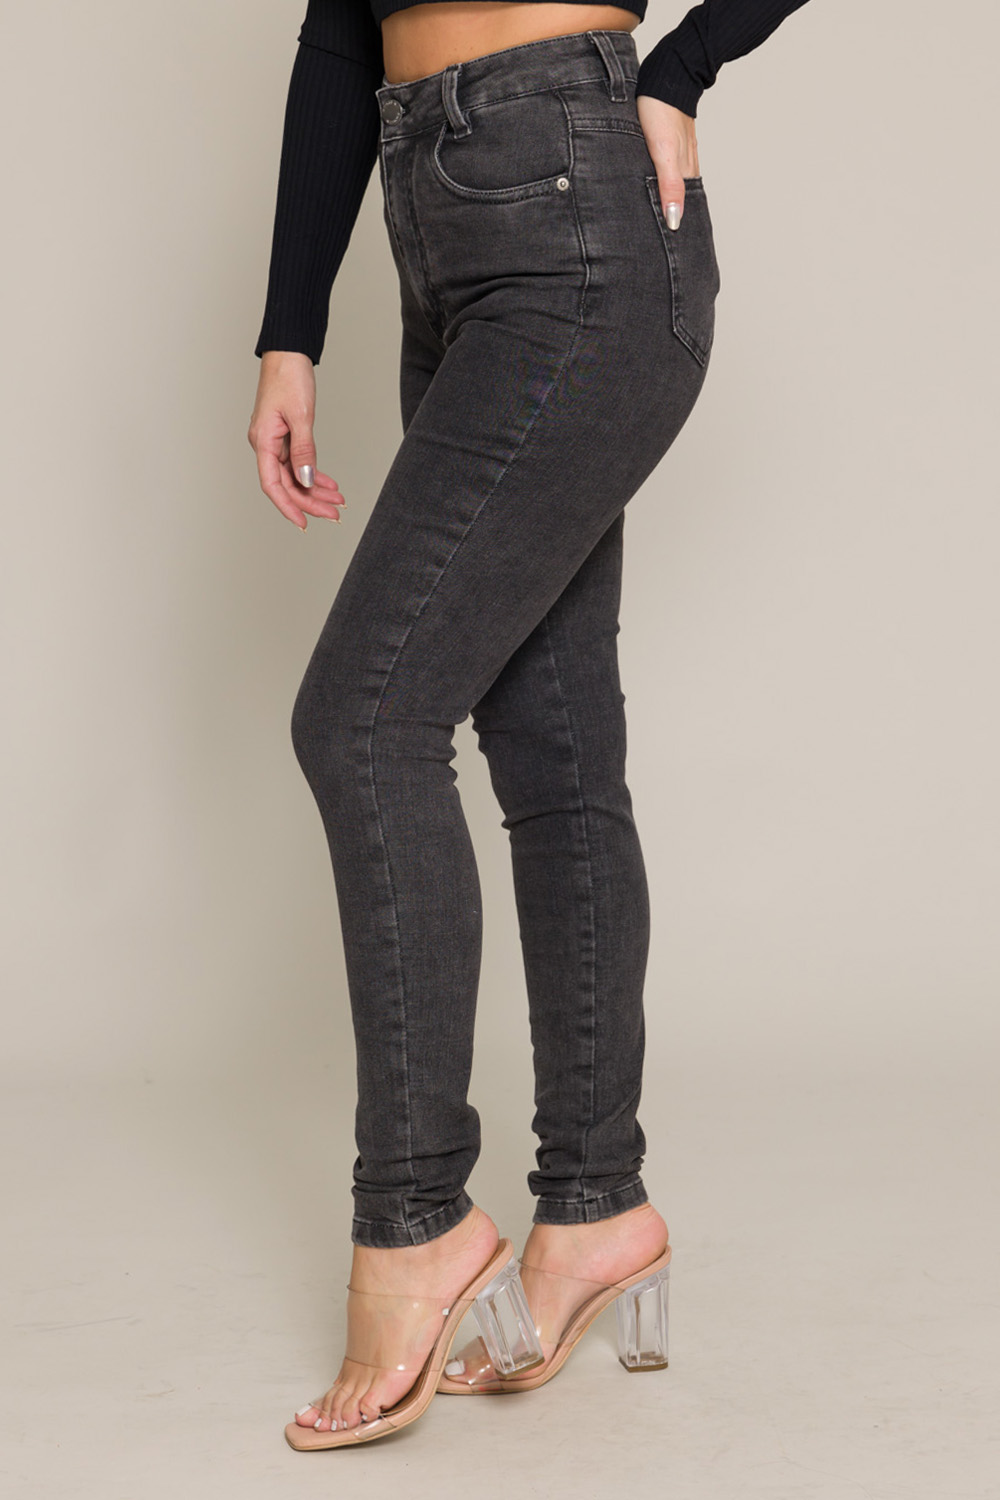 Calça Jeans Skinny Hot Pant Basic 11647 - Preto Estonado